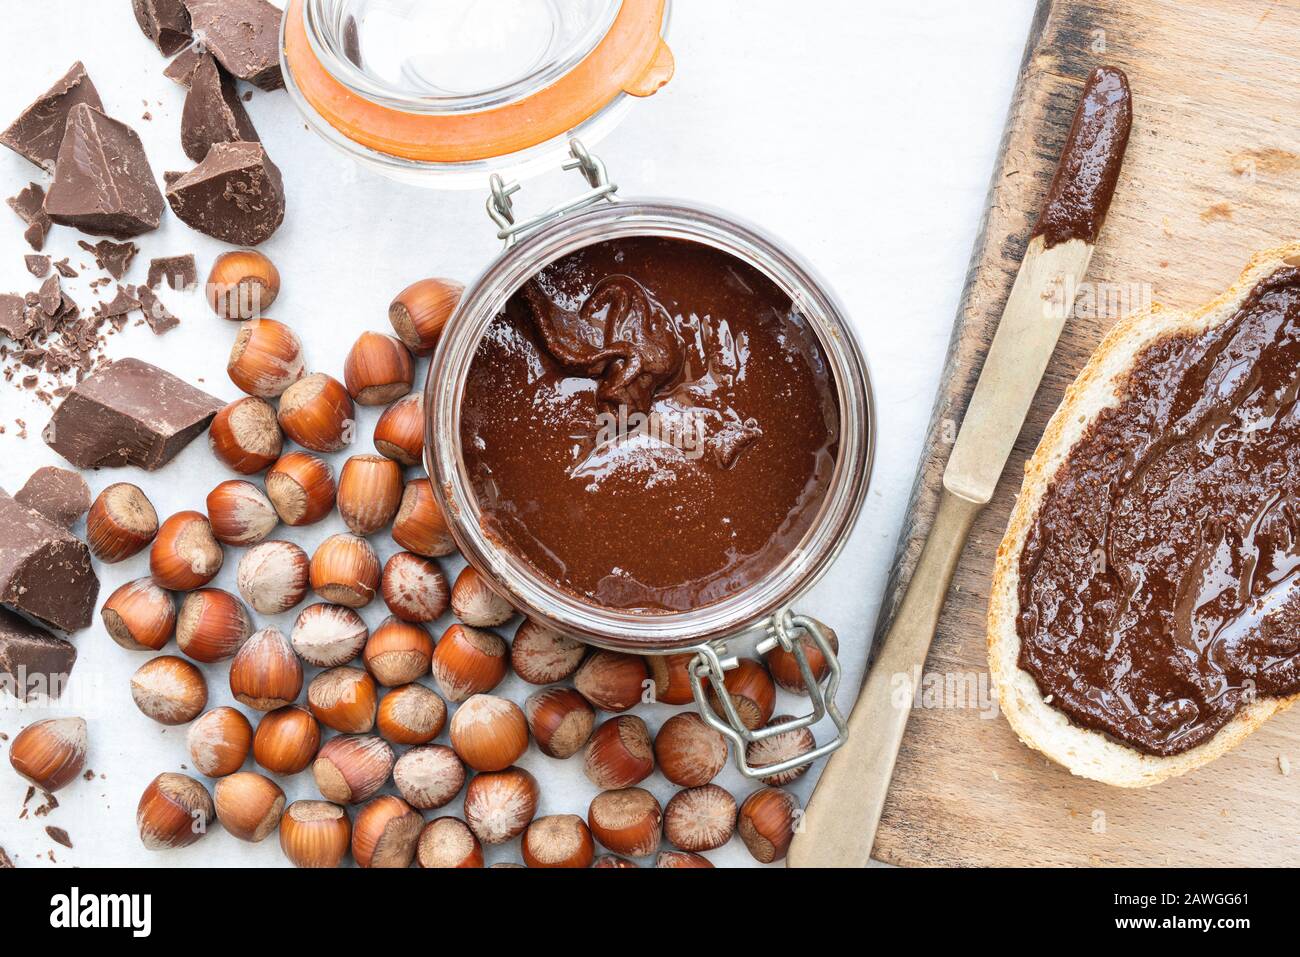 Homemade vegan hazelnut chocolate spread on sourdough bread and in a kilner jar, with unshelled hazelnuts and chunks of dark chocolate Stock Photo